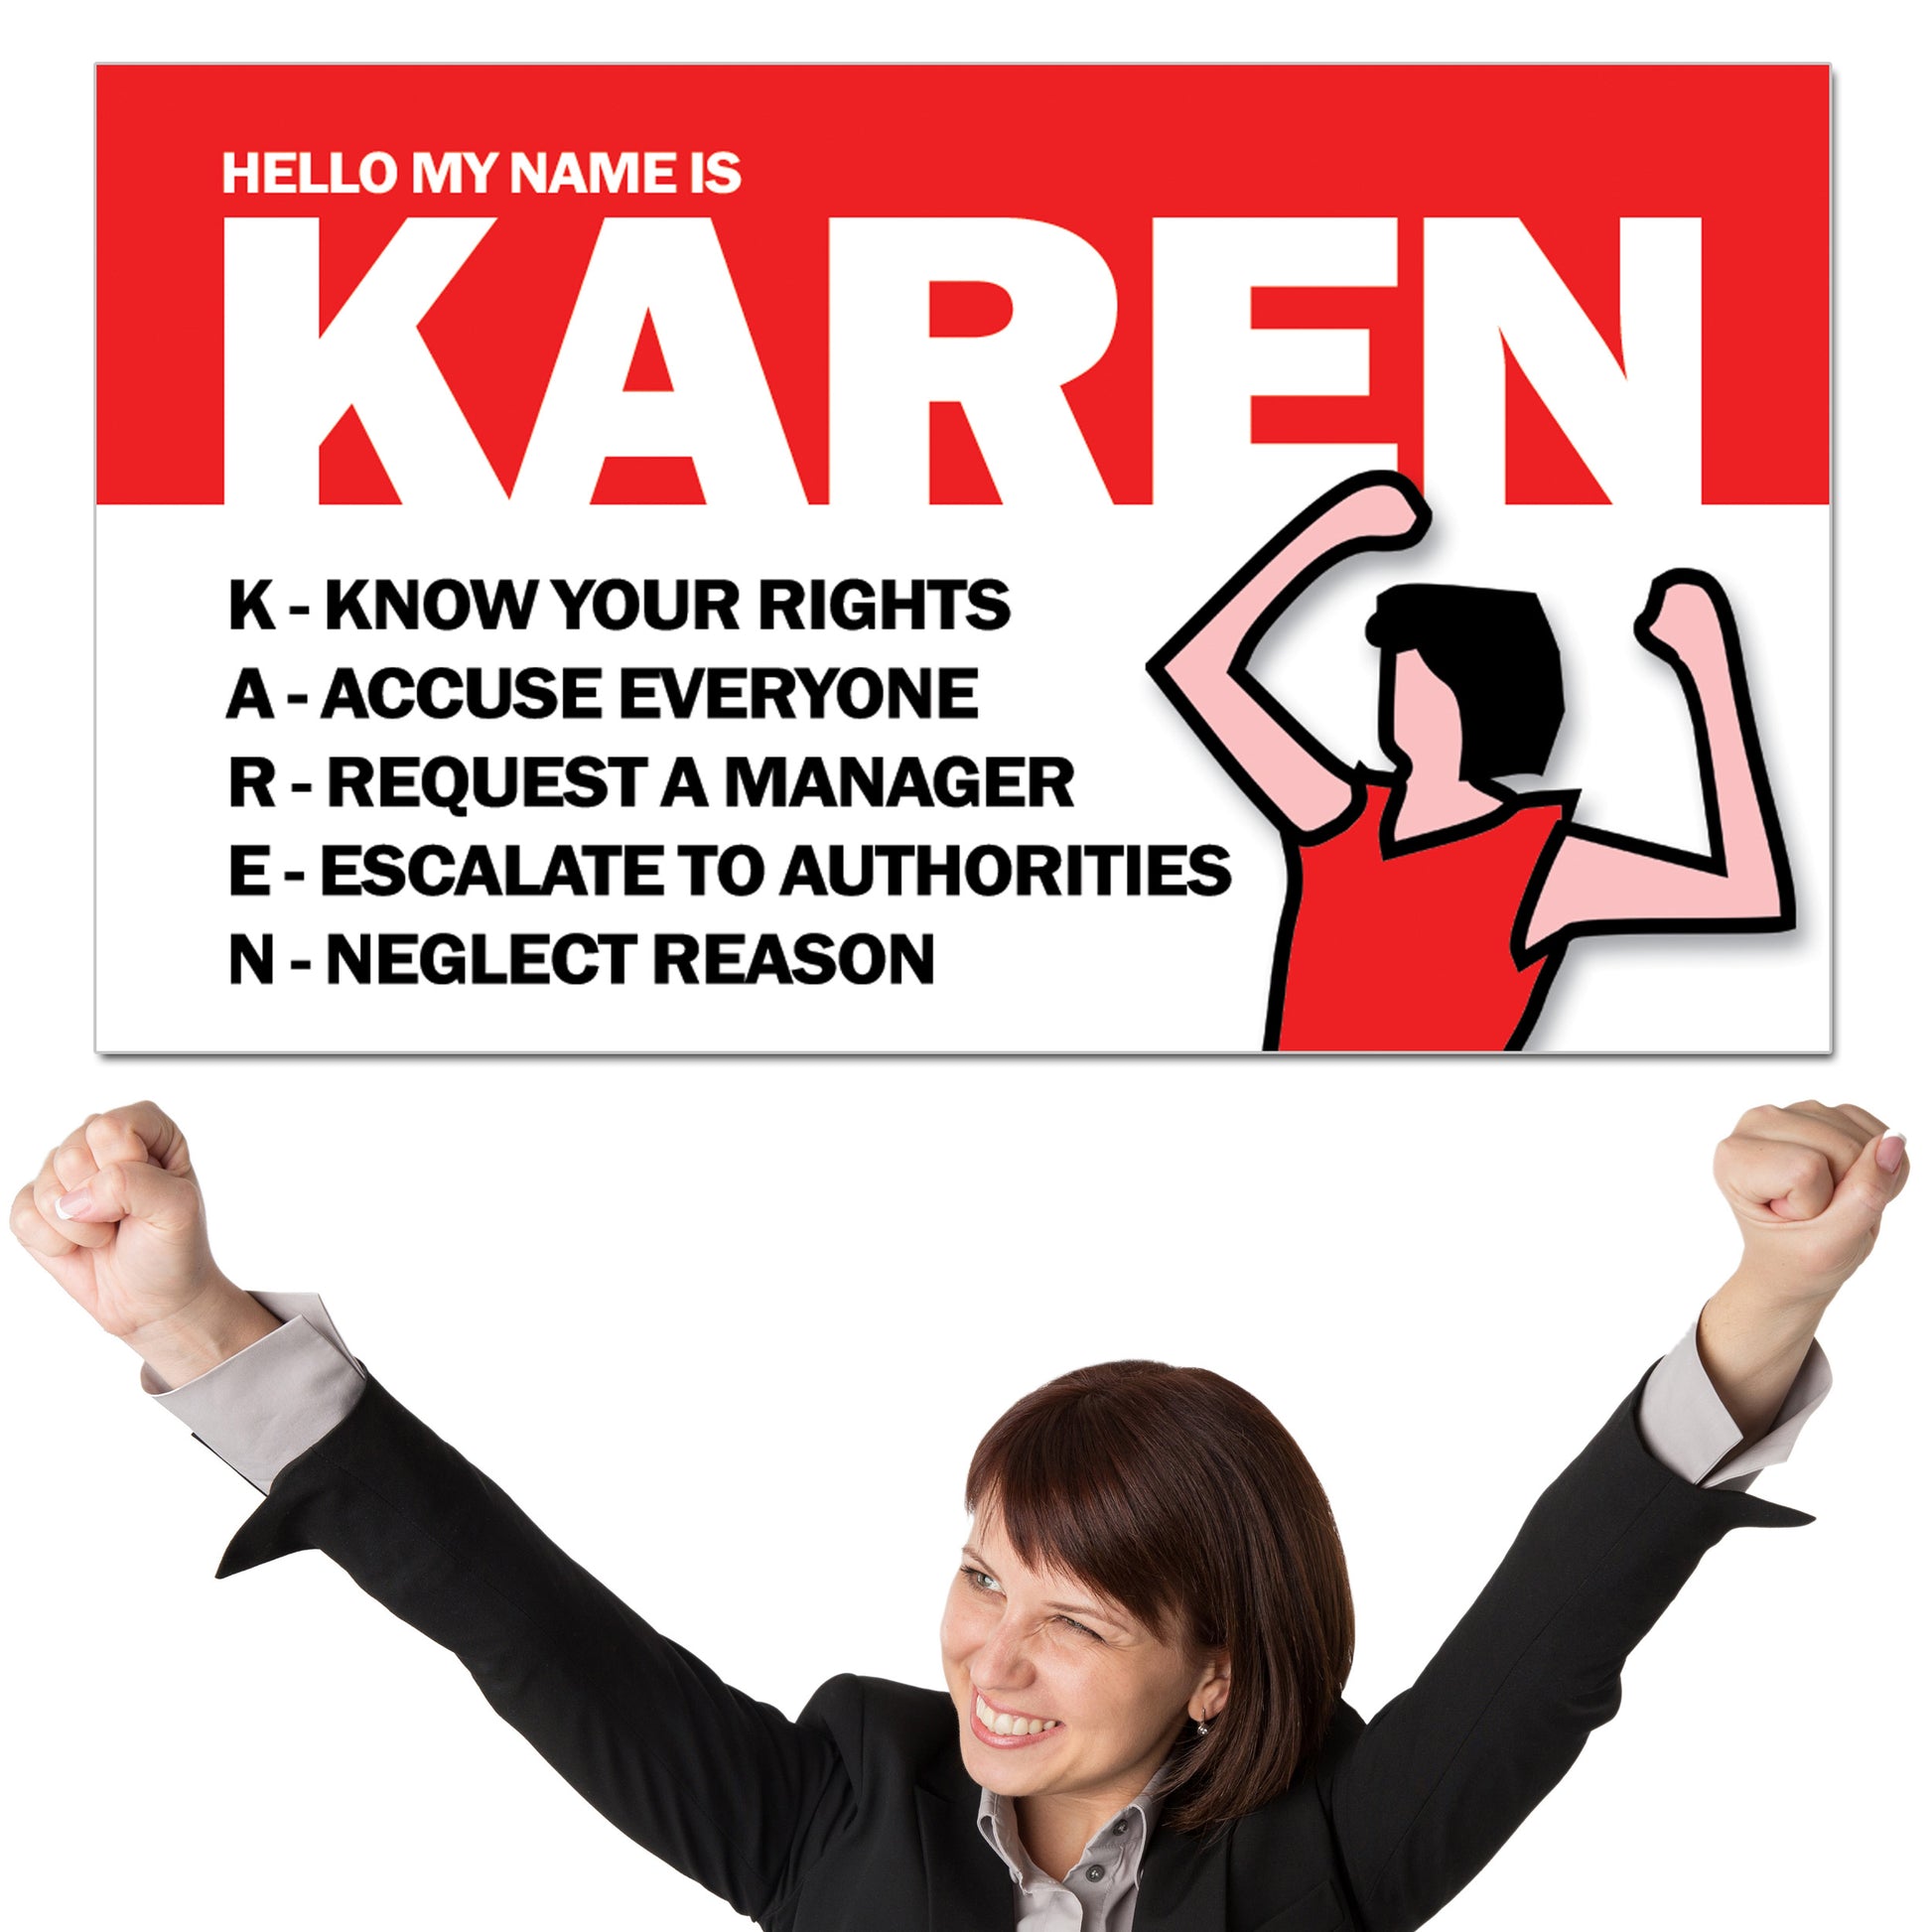 Hello My Name is Karen Cards